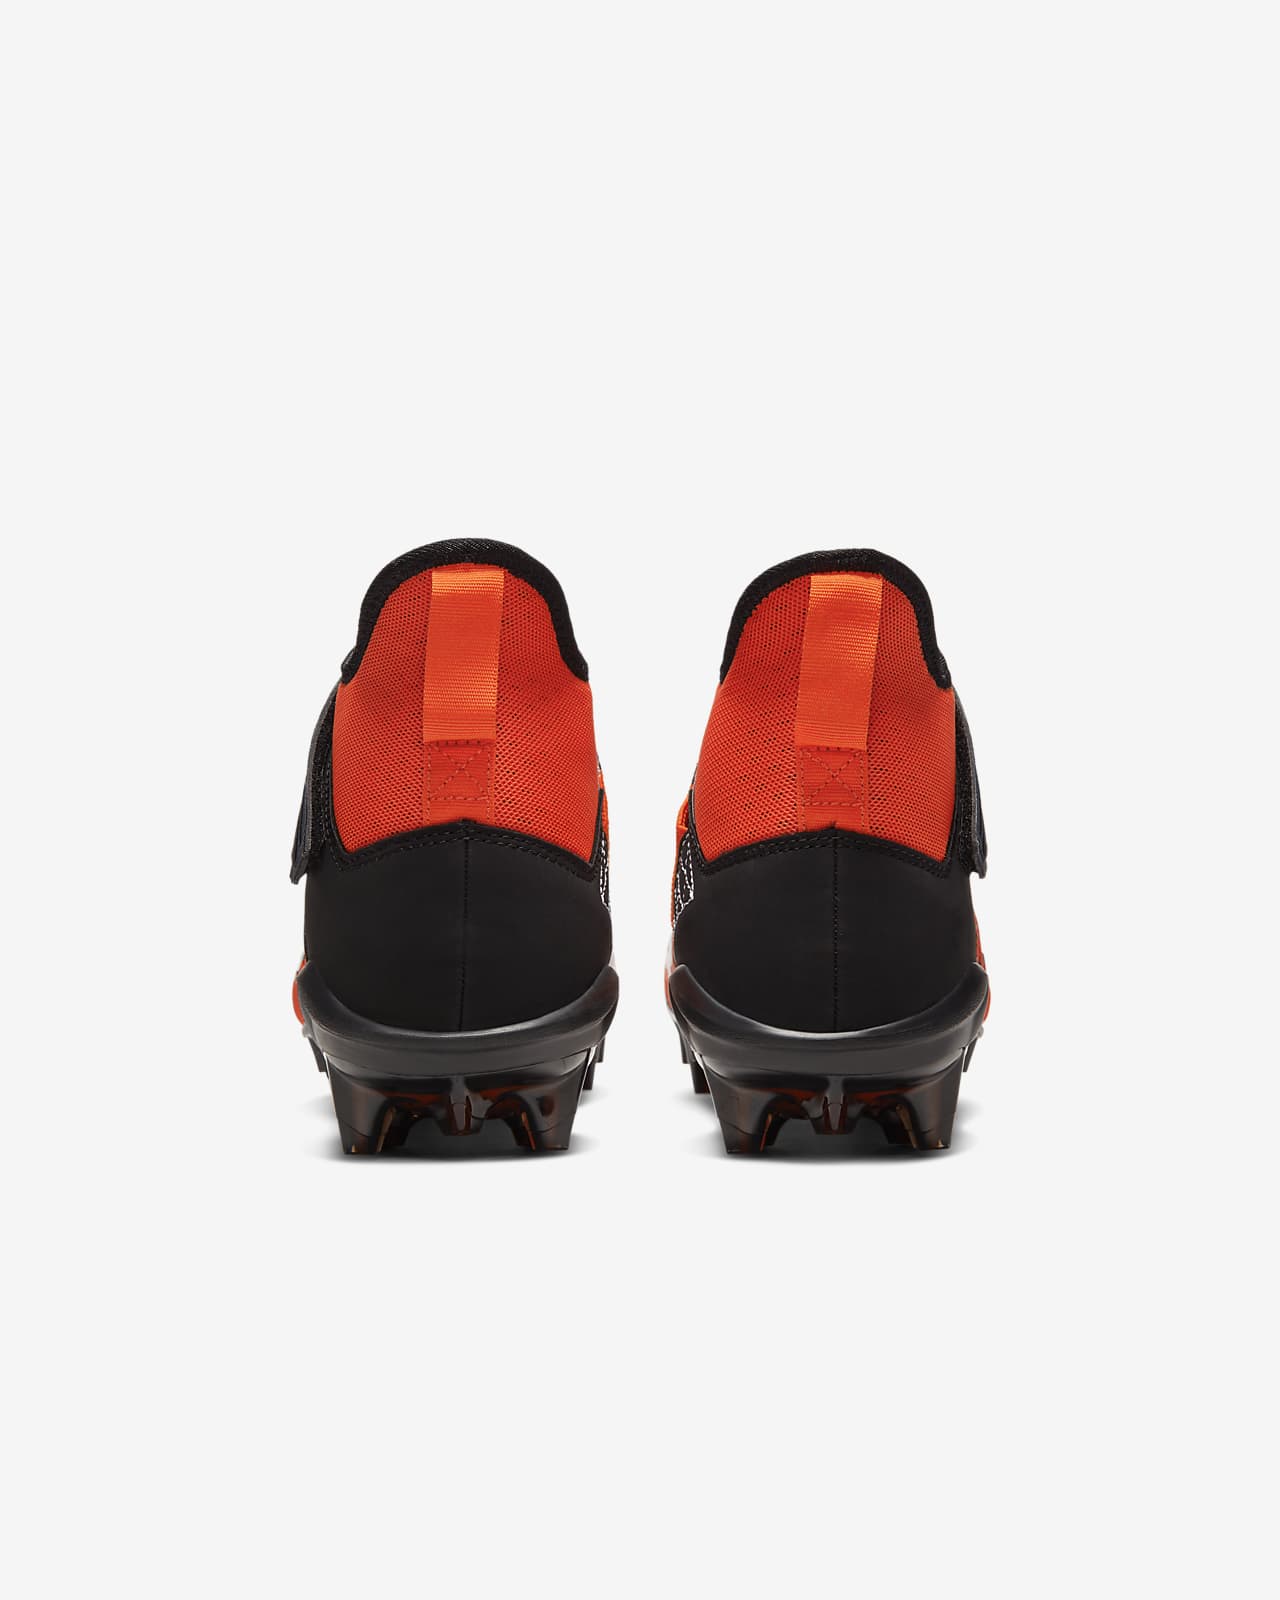 orange and black football cleats